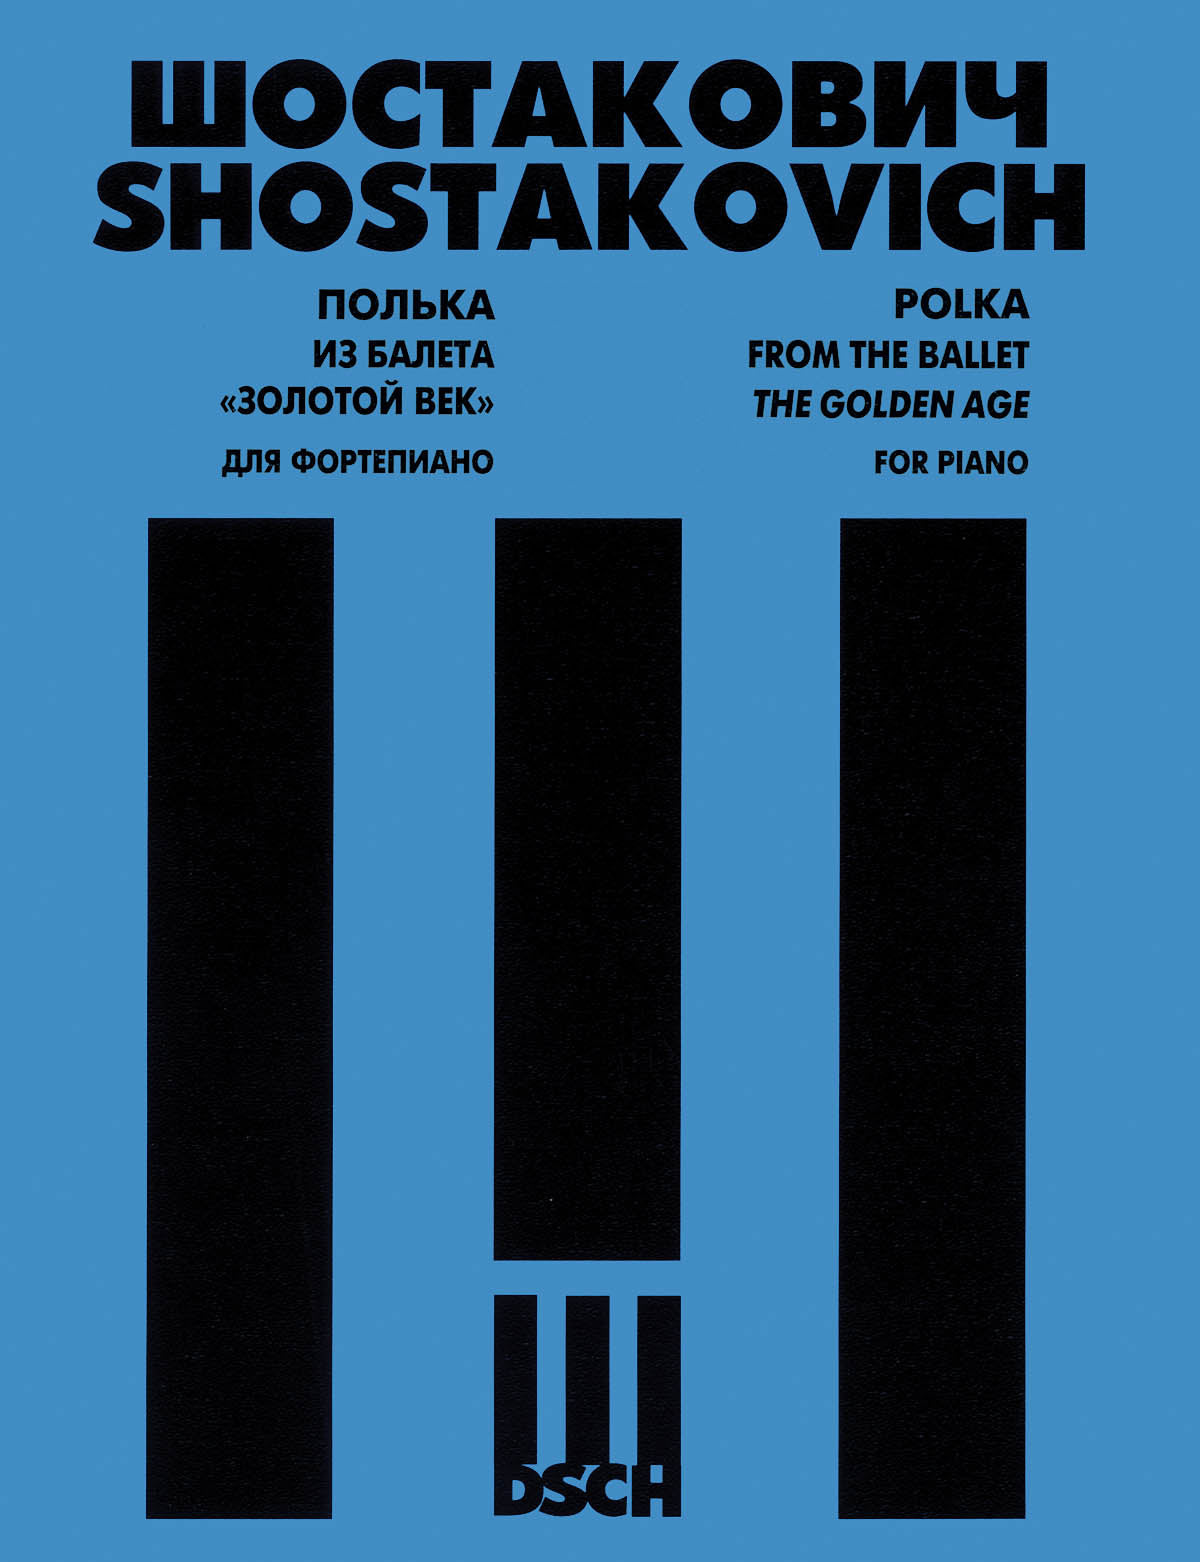 Shostakovich: Polka from the Ballet "The Golden Age", Op. 22b